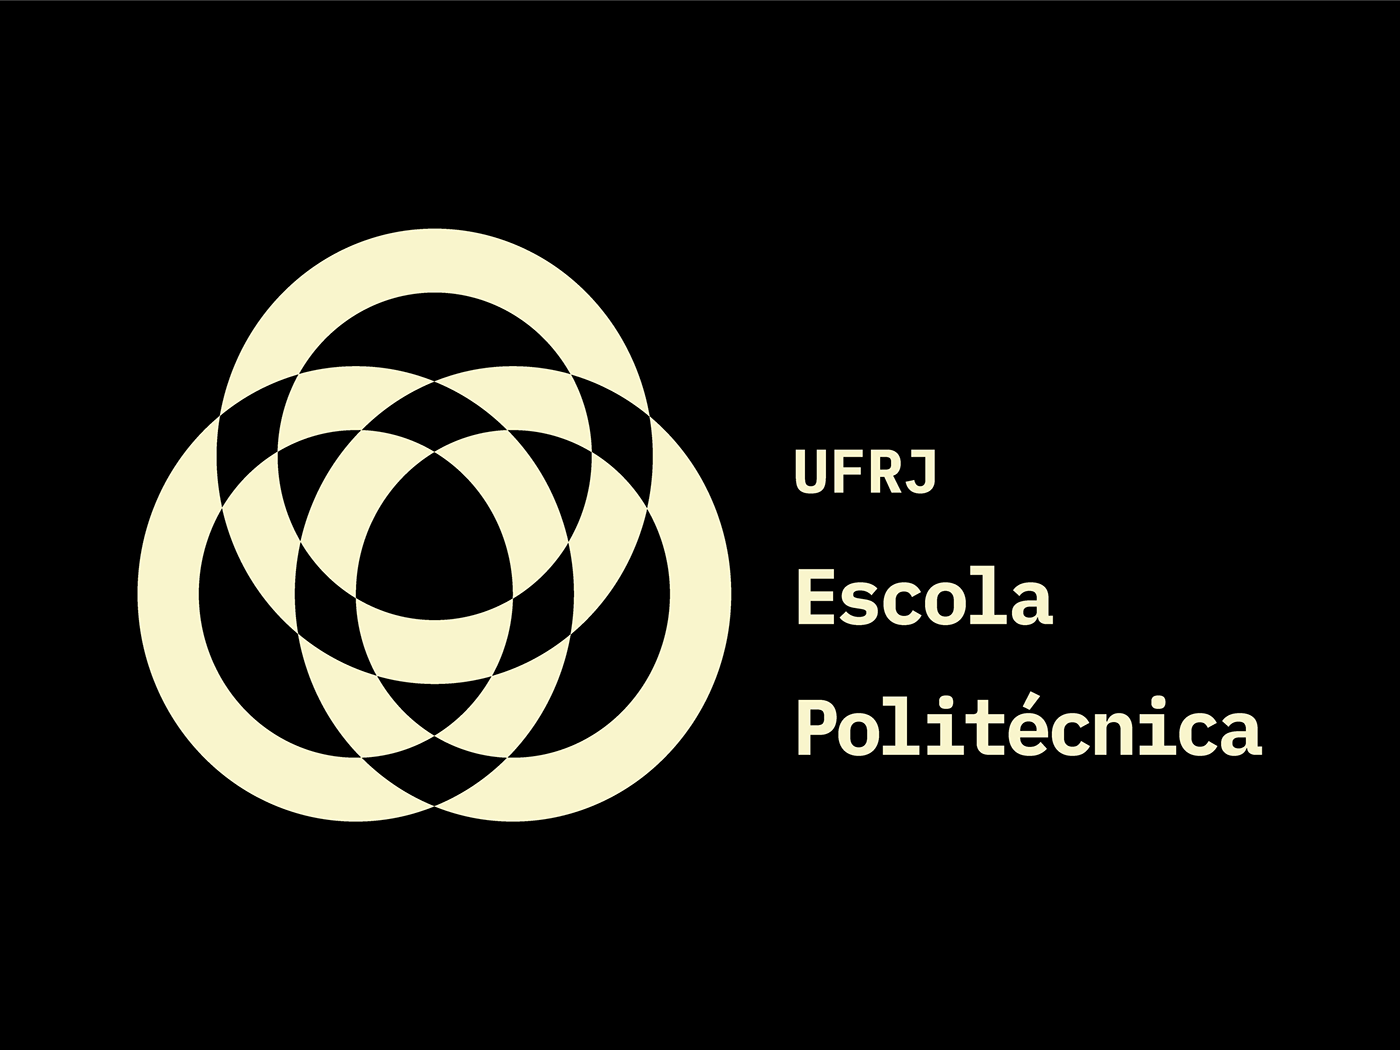 branding  Design Brasileiro graphic design  logo school universidade University Illustrator institucional marca